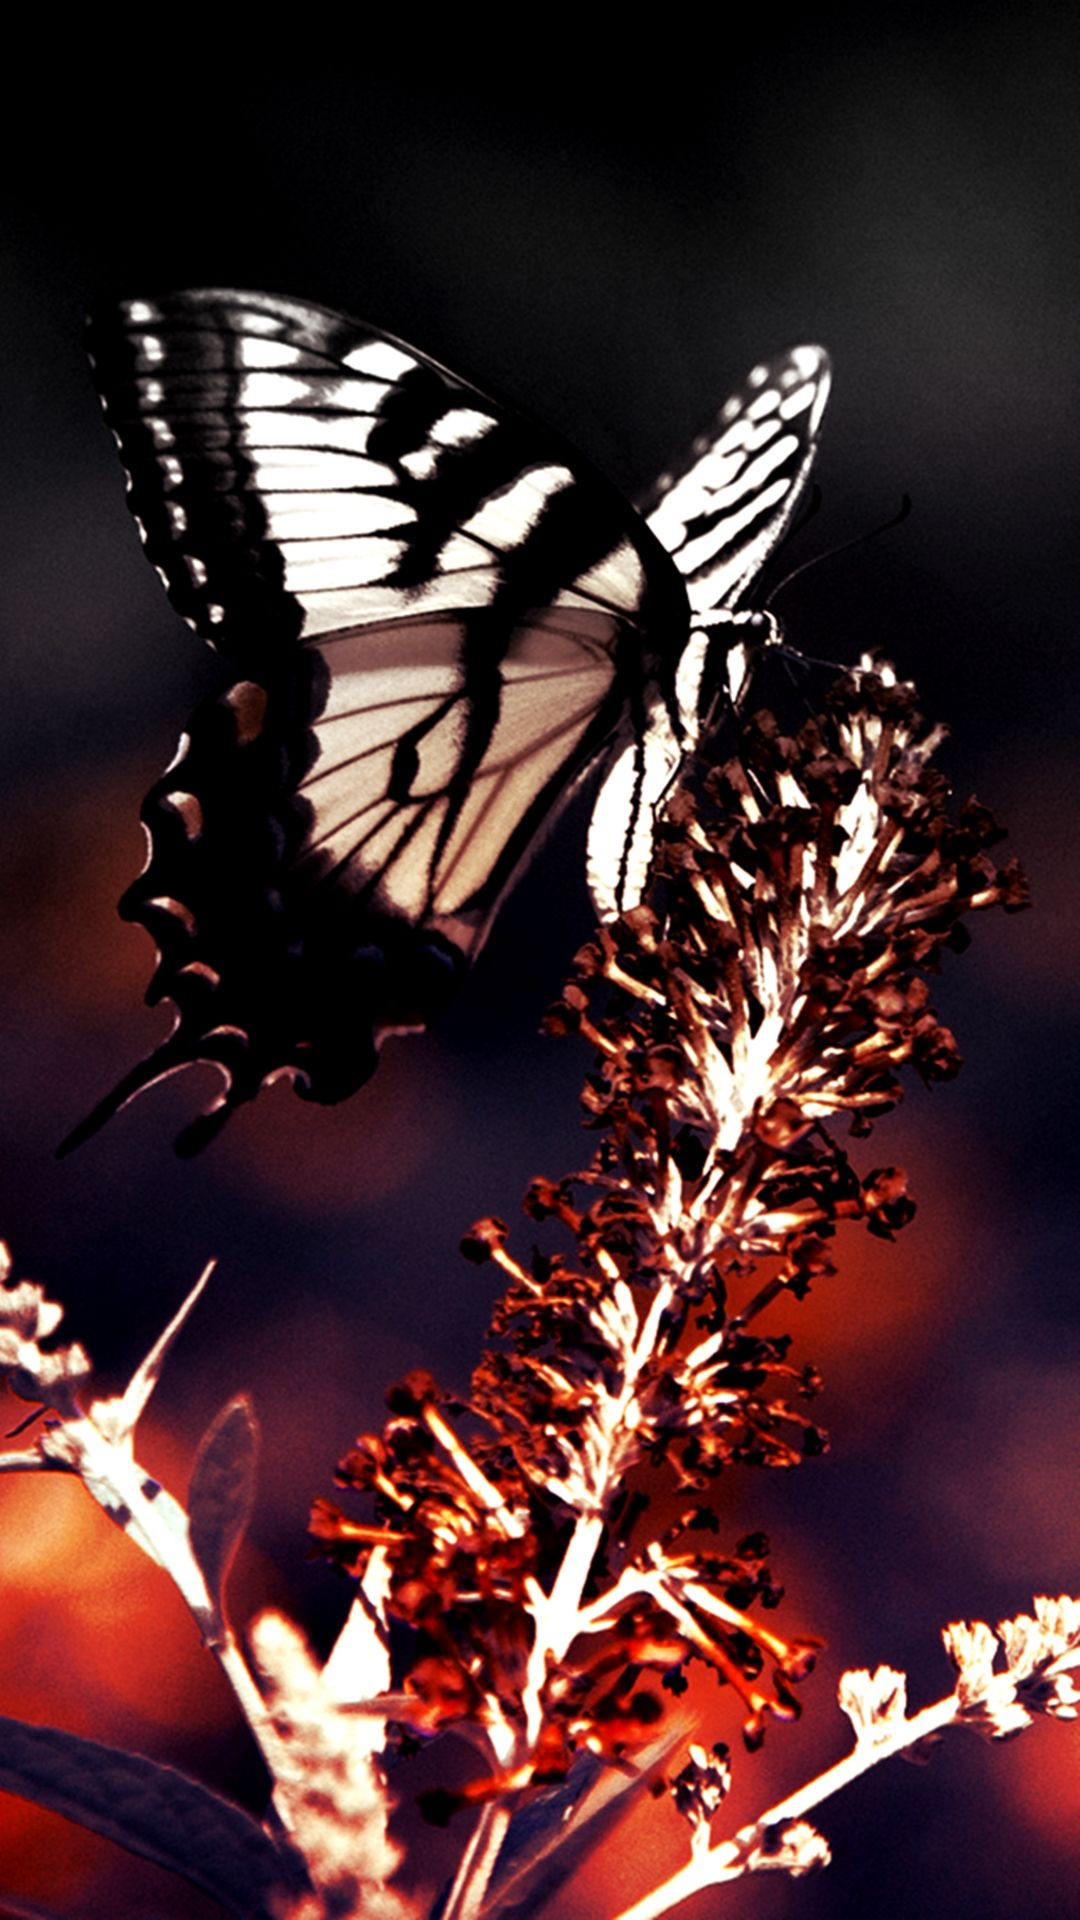 Butterfly wallpaper iPhone 5